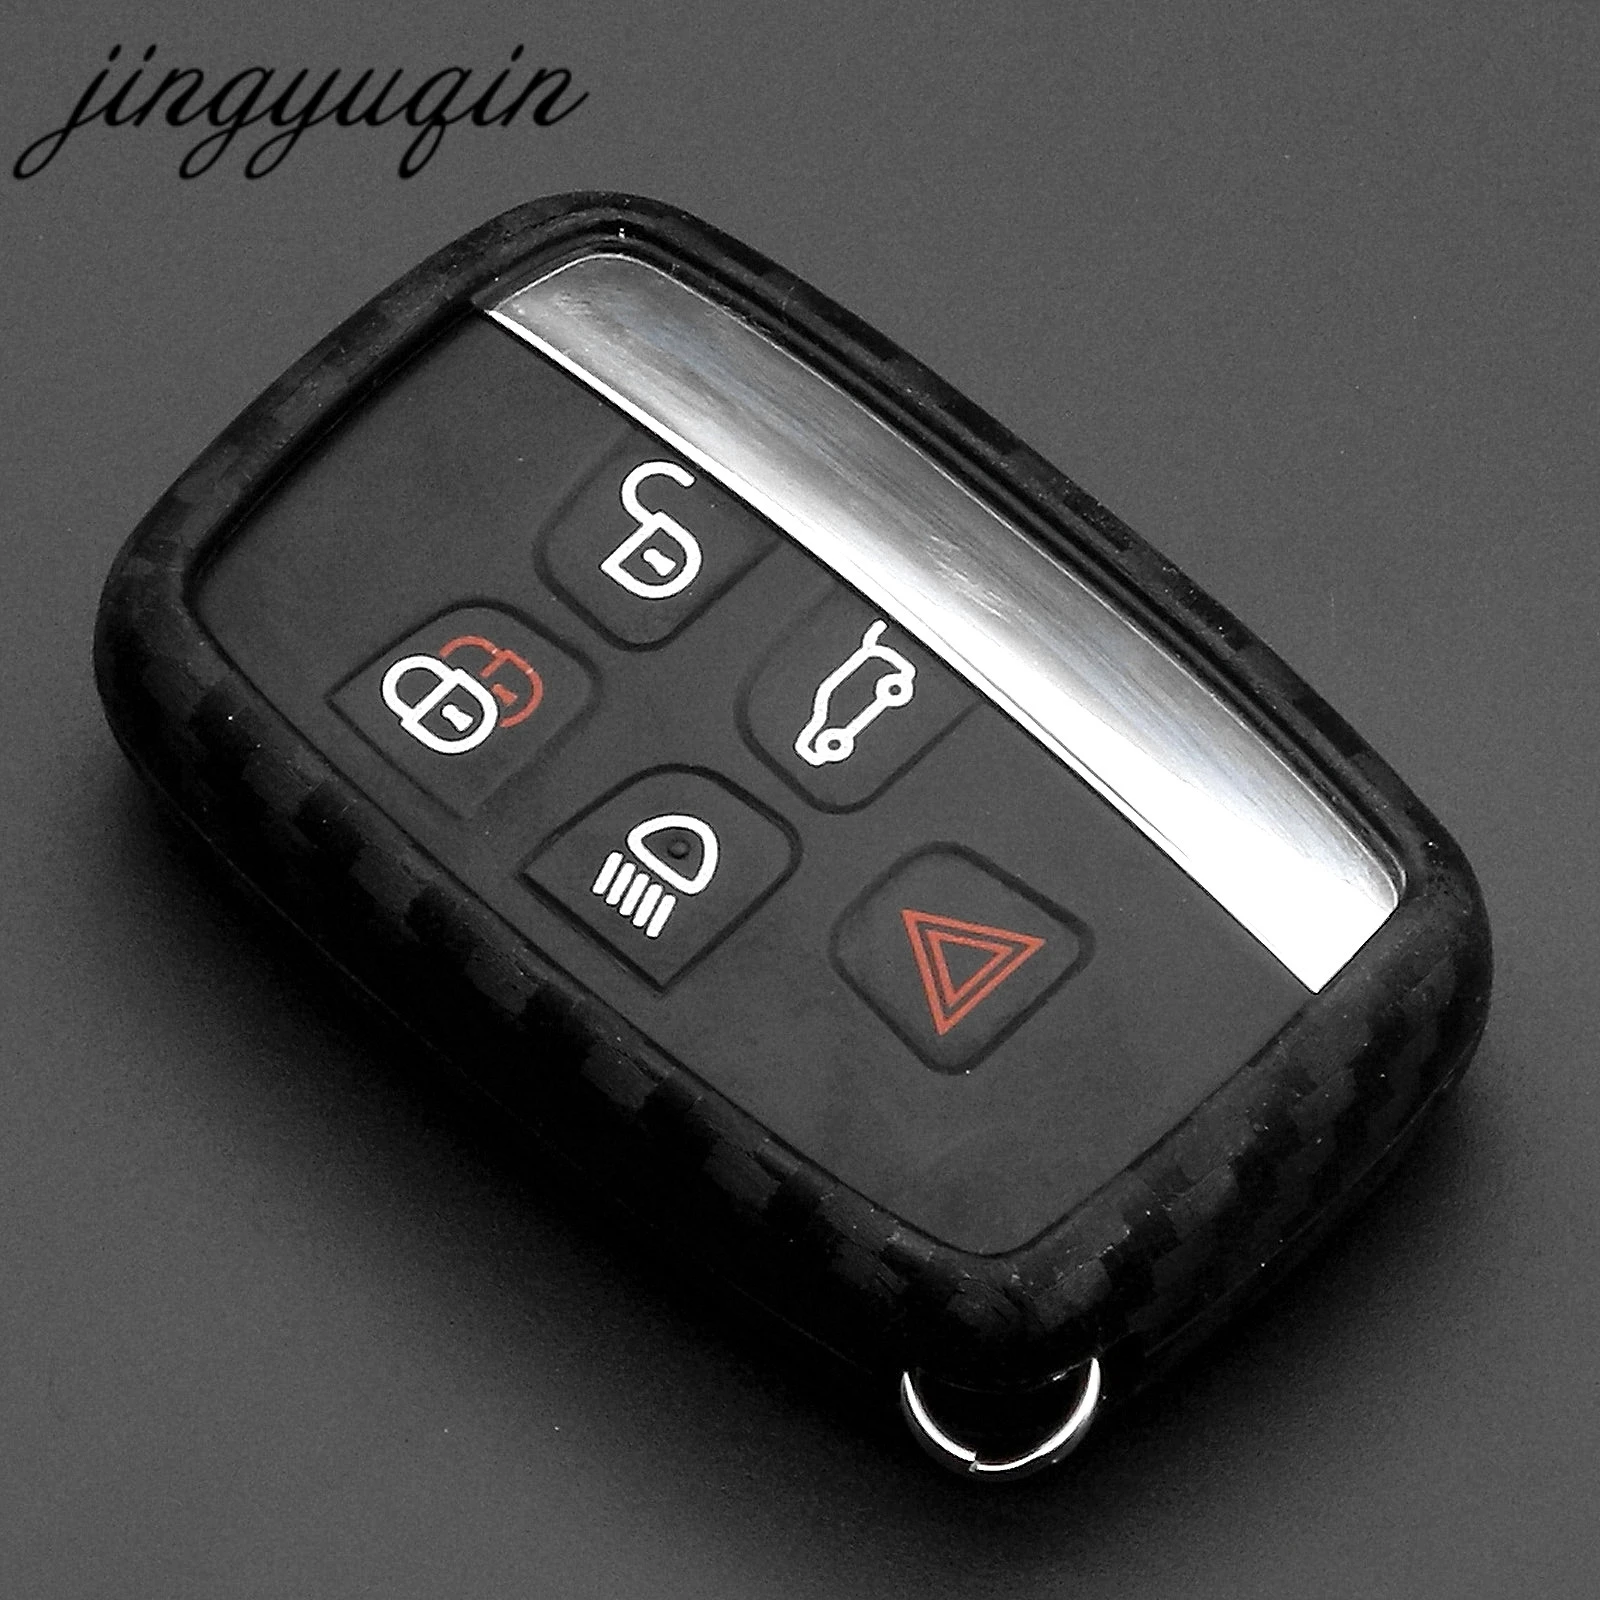 Jingyuqin автомобильный чехол для ключей, углеродный силиконовый чехол для Land Rover Range Rover Sport Evoque freelander 2 Jaguar XE XJ XJL XF C-X16 V12